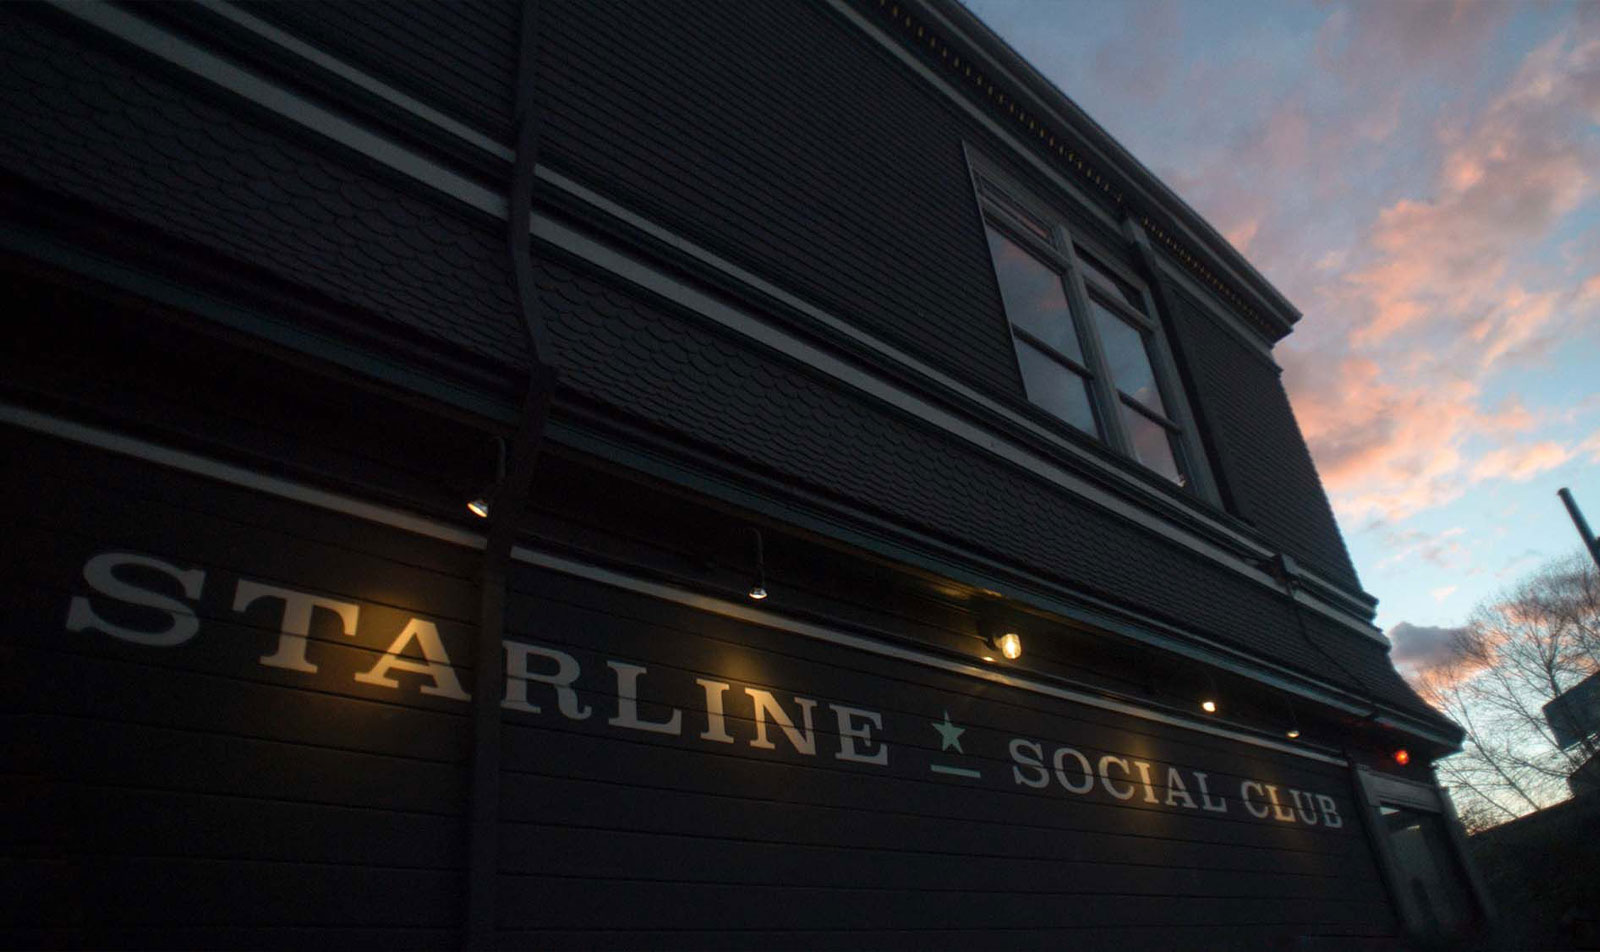 Starline-Social-Club-Outside-Image